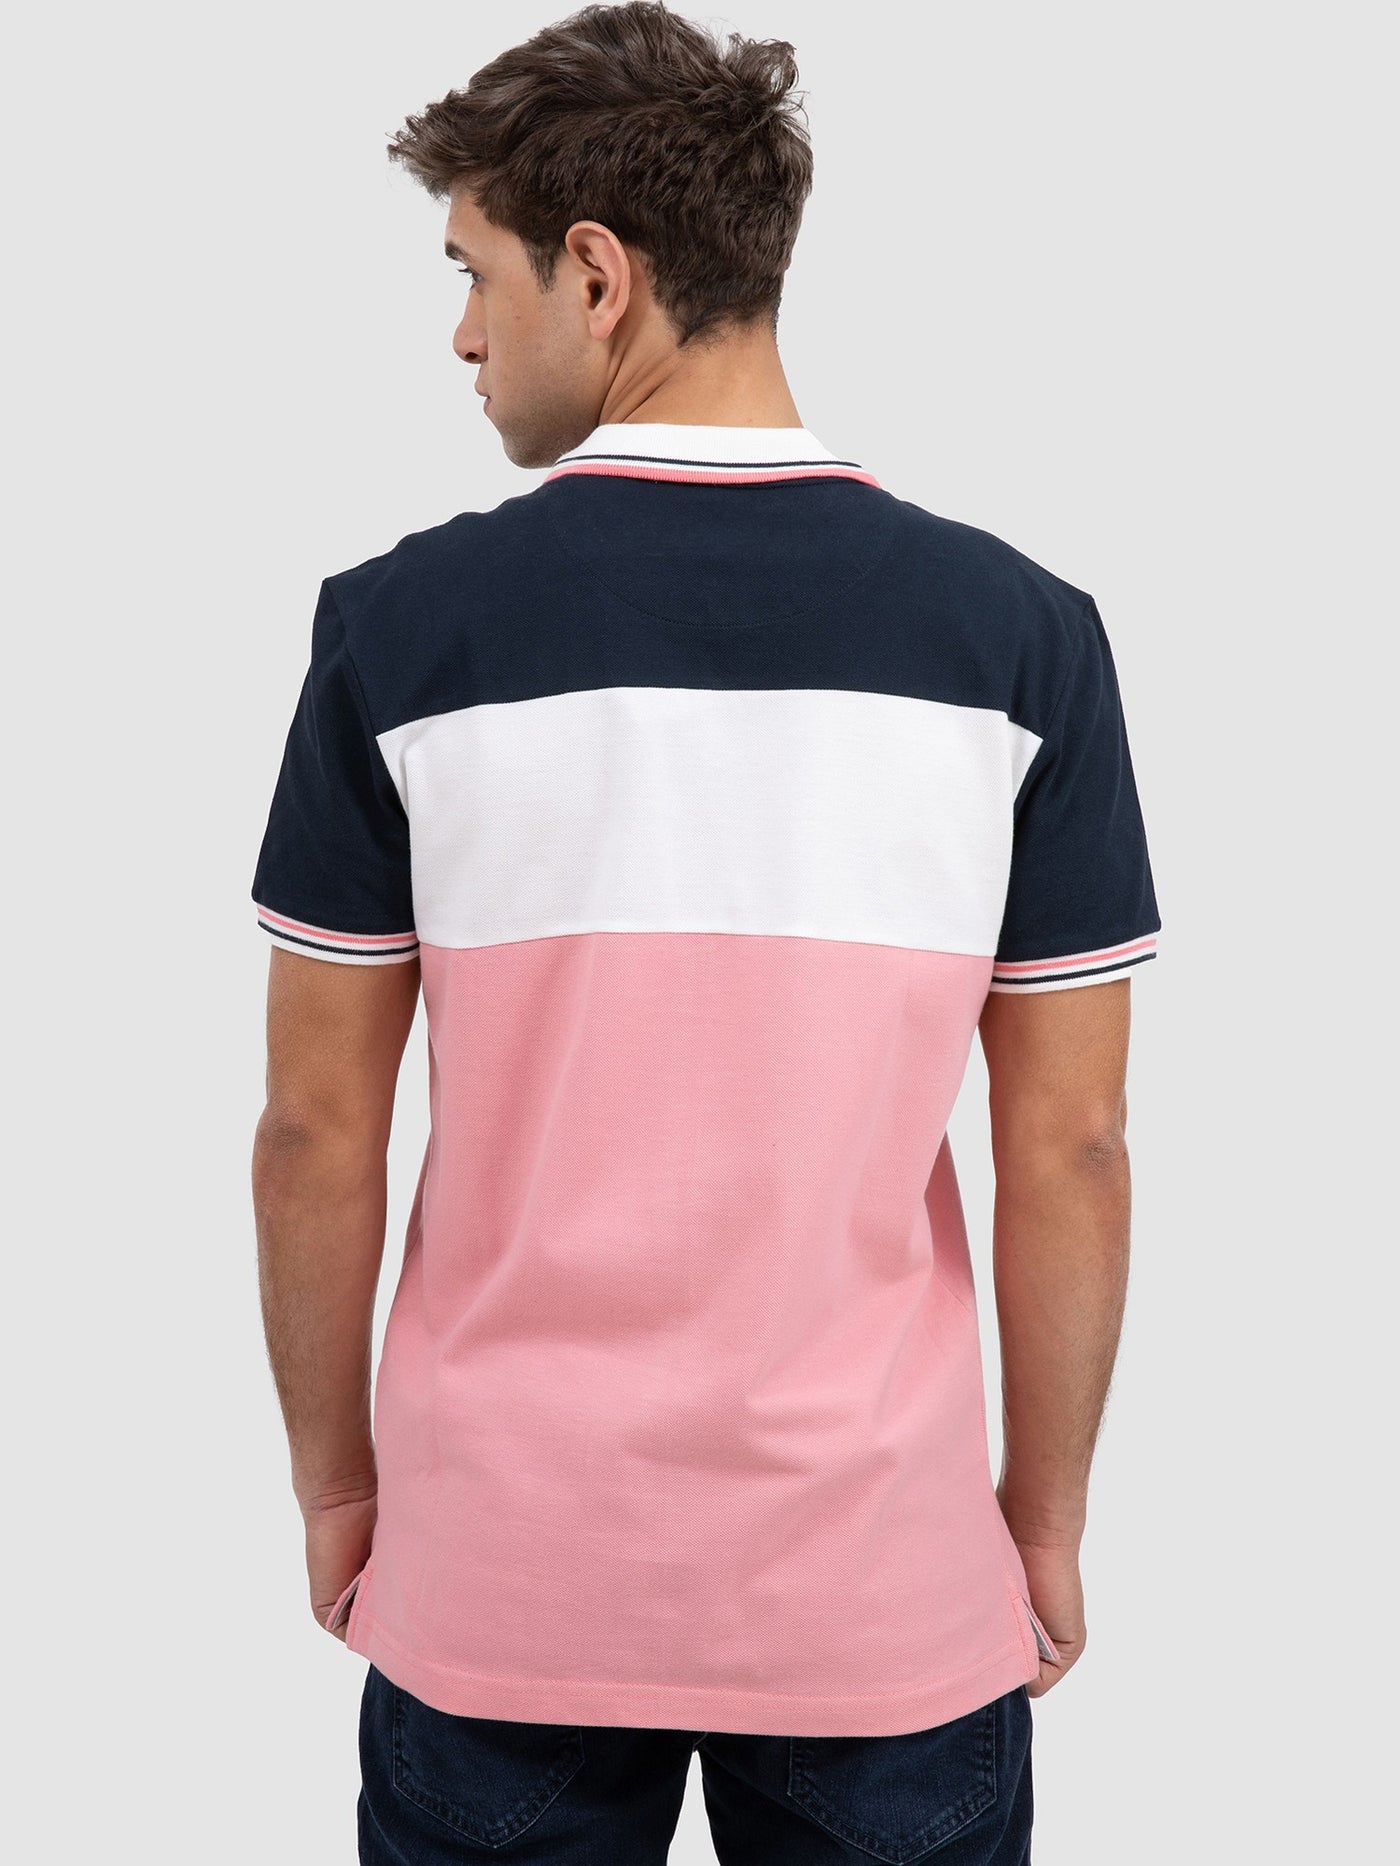 Premoda Mens Color-Block Polo Shirt